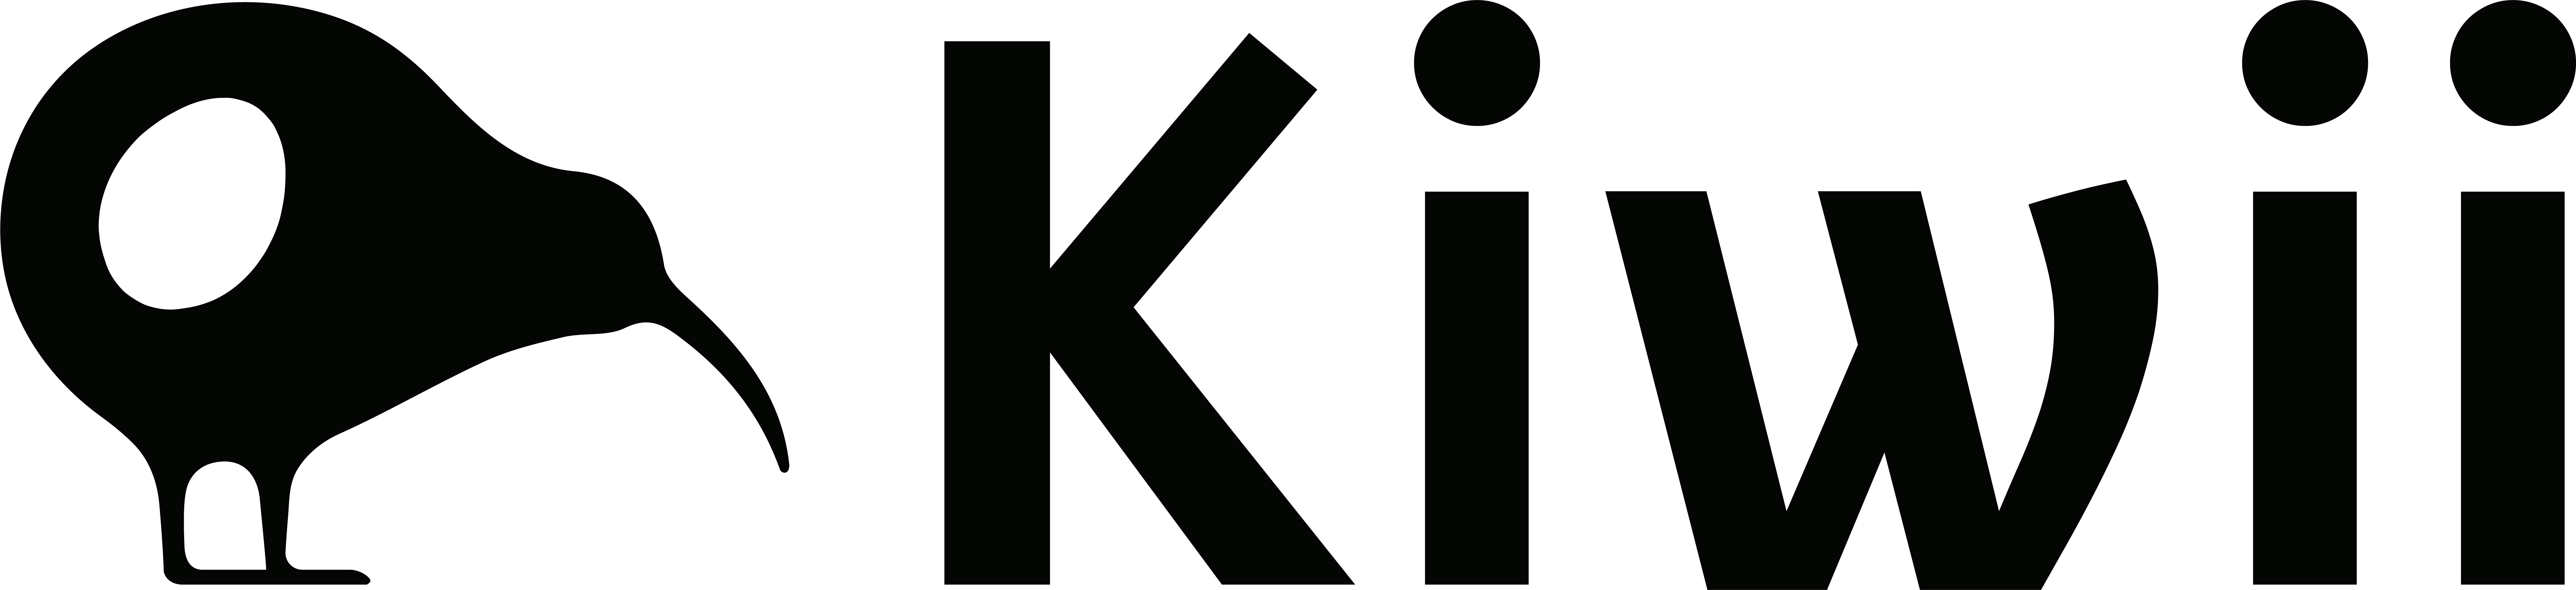 Kiwii s.r.l. logo